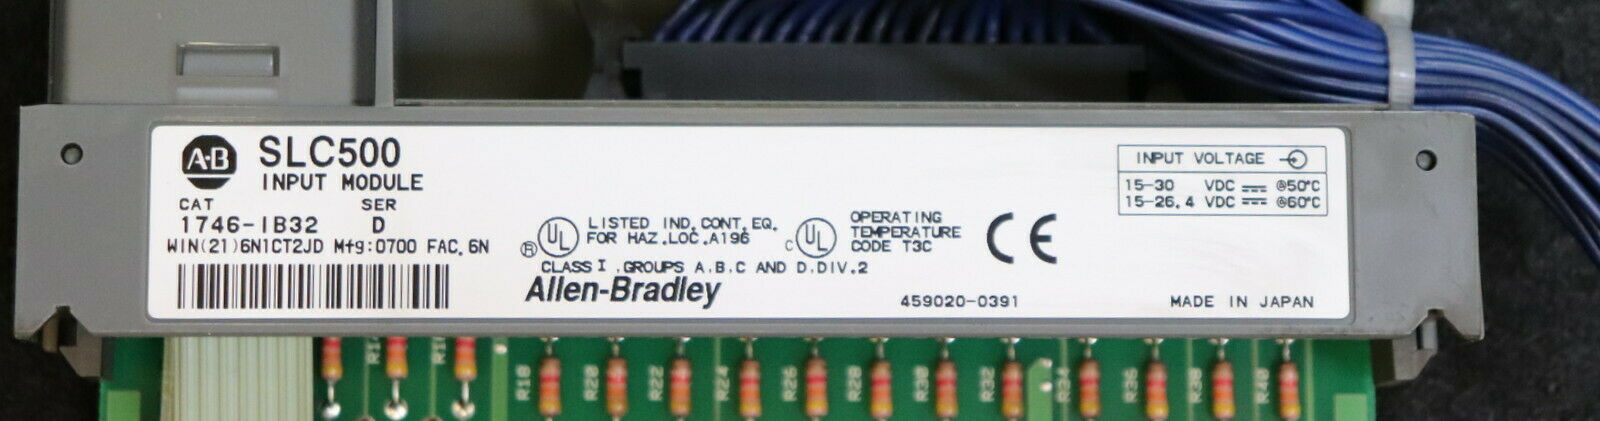 ALLEN BRADLEY Input module DC-SINK SLC500 CAT. 1746-IB32 Ser. D - gebraucht